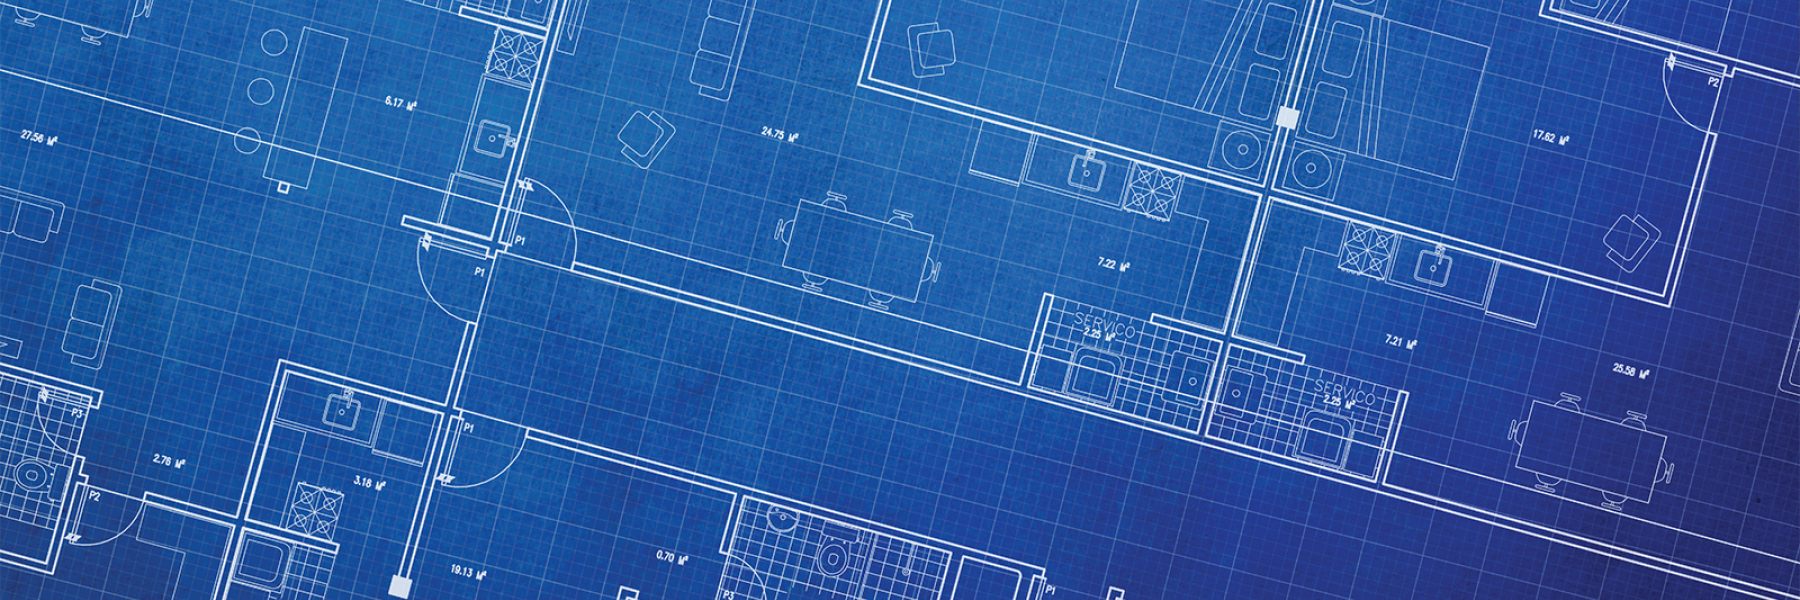 Blueprint of a floor plan layout